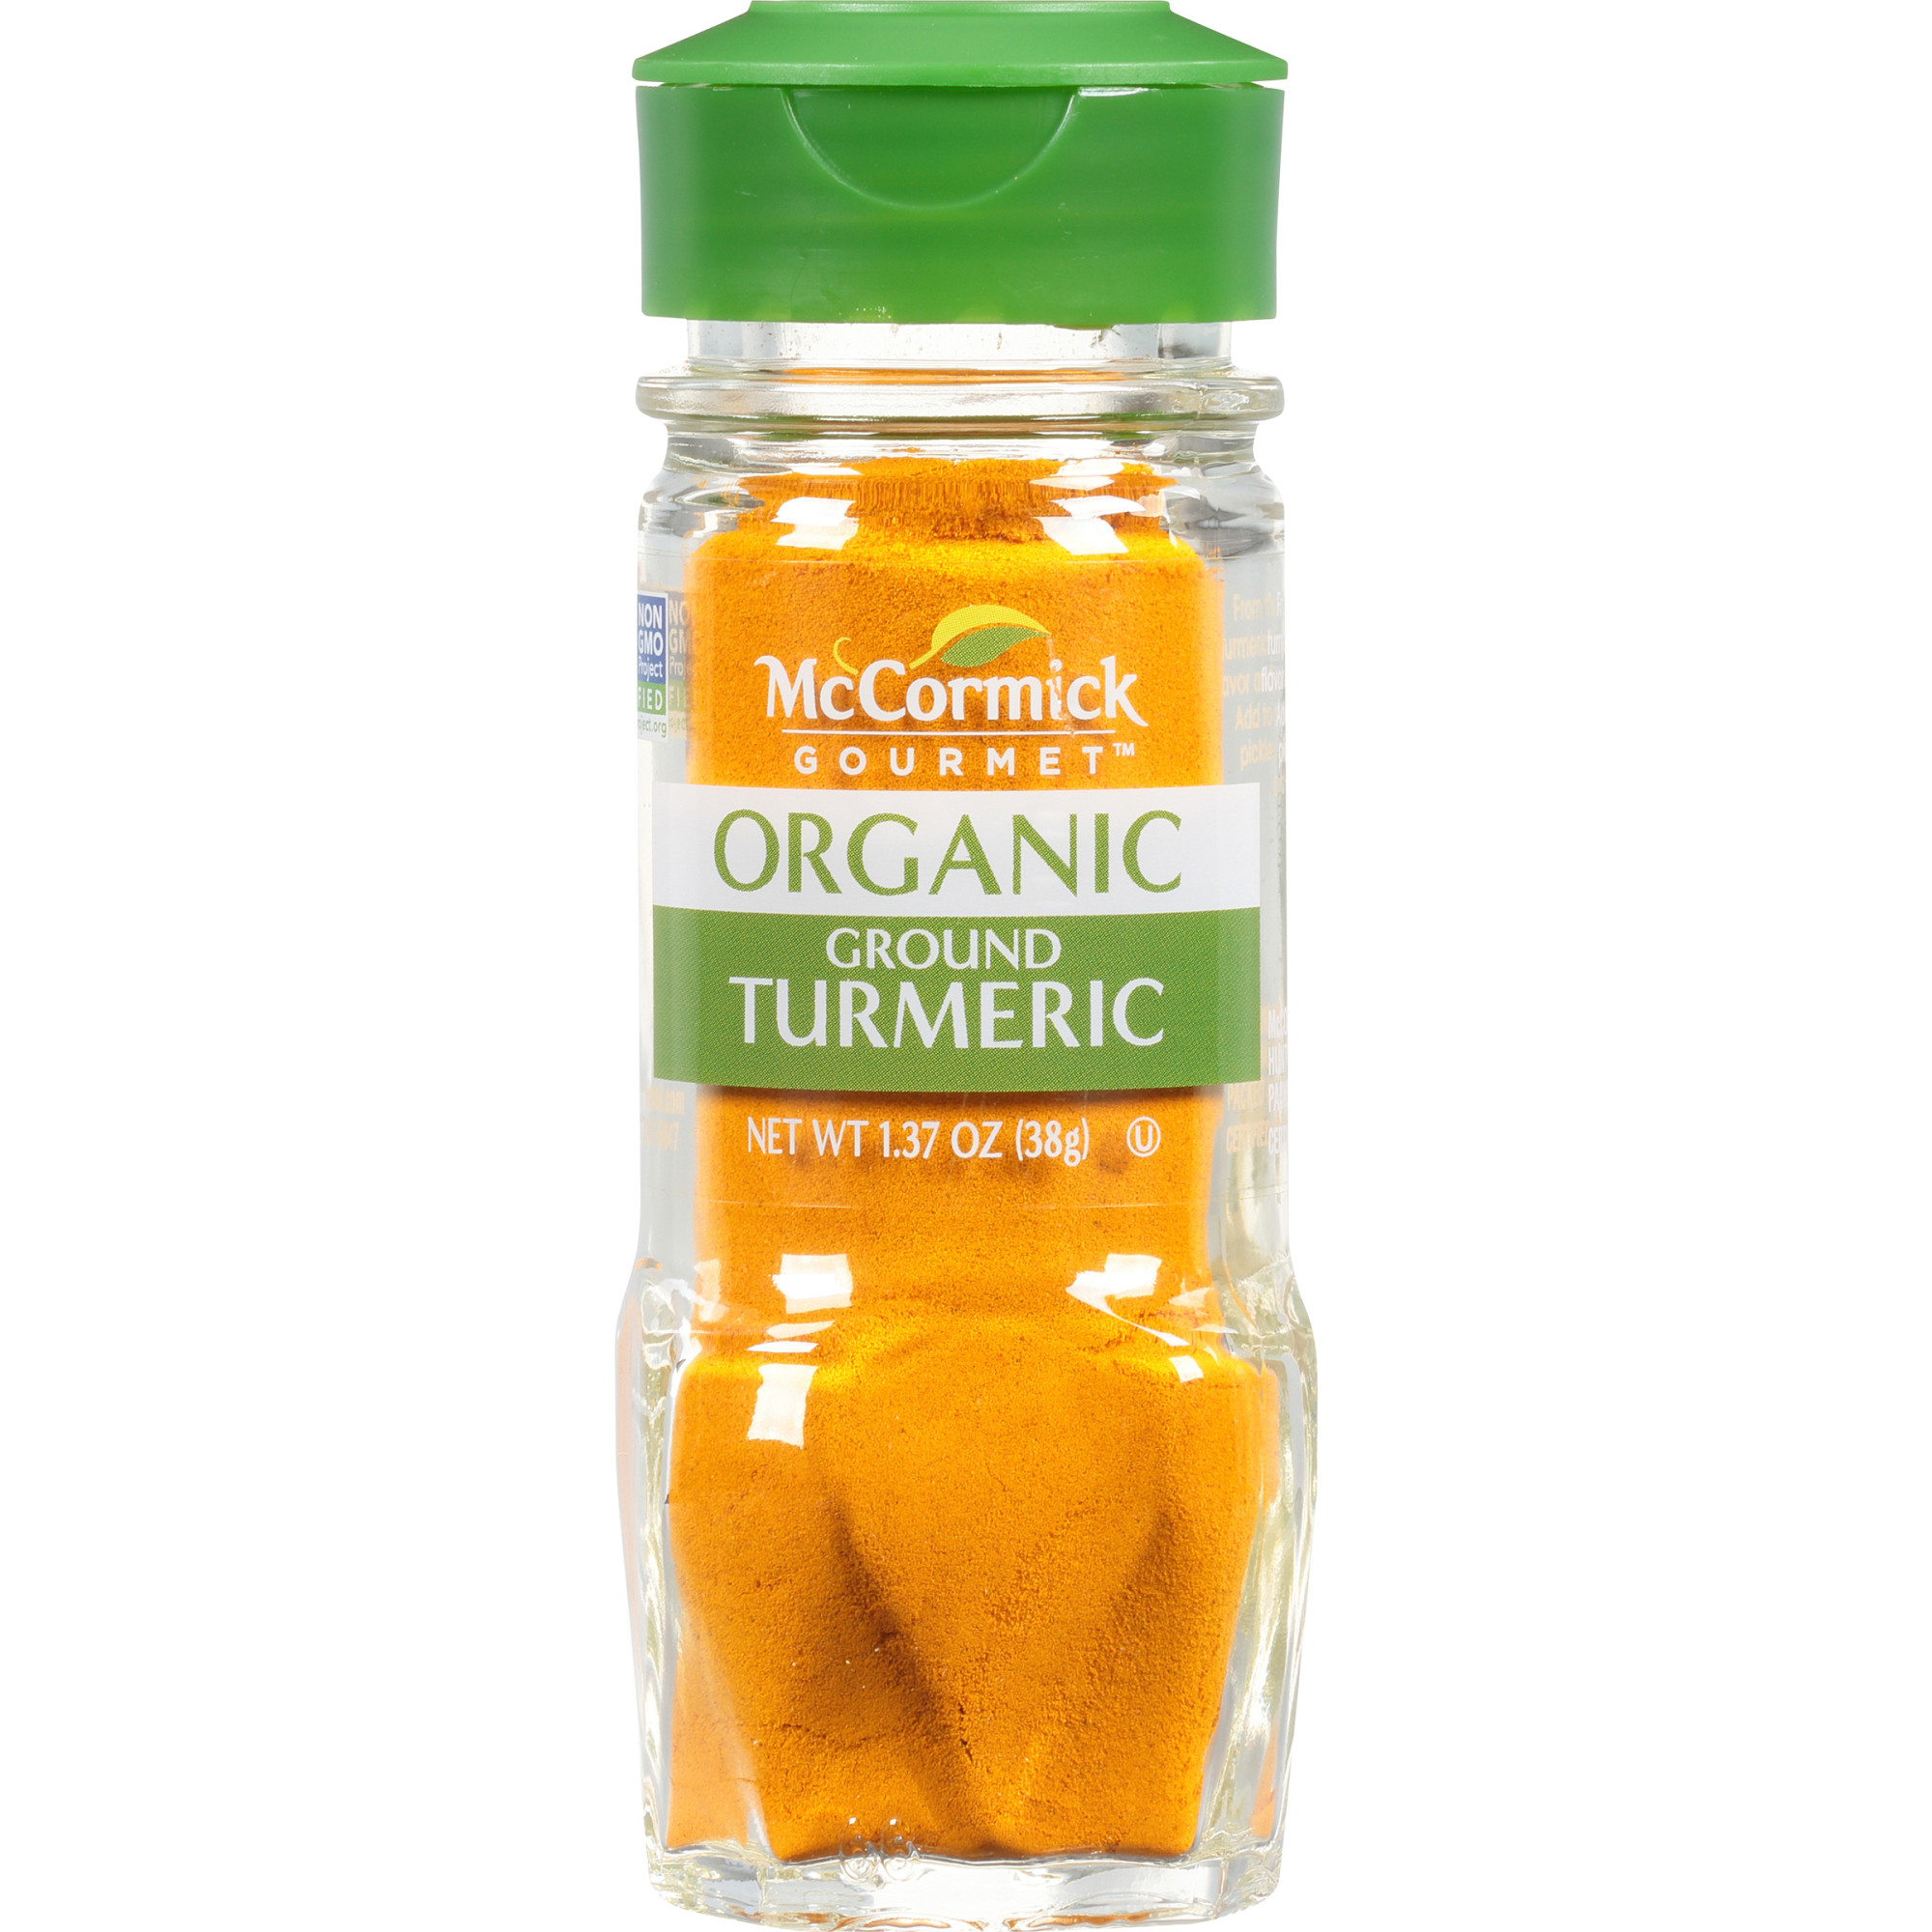 McCormick Gourmet Organic Ground Turmeric, 1.37 oz Mixed Spices & Seasonings - image 1 of 11